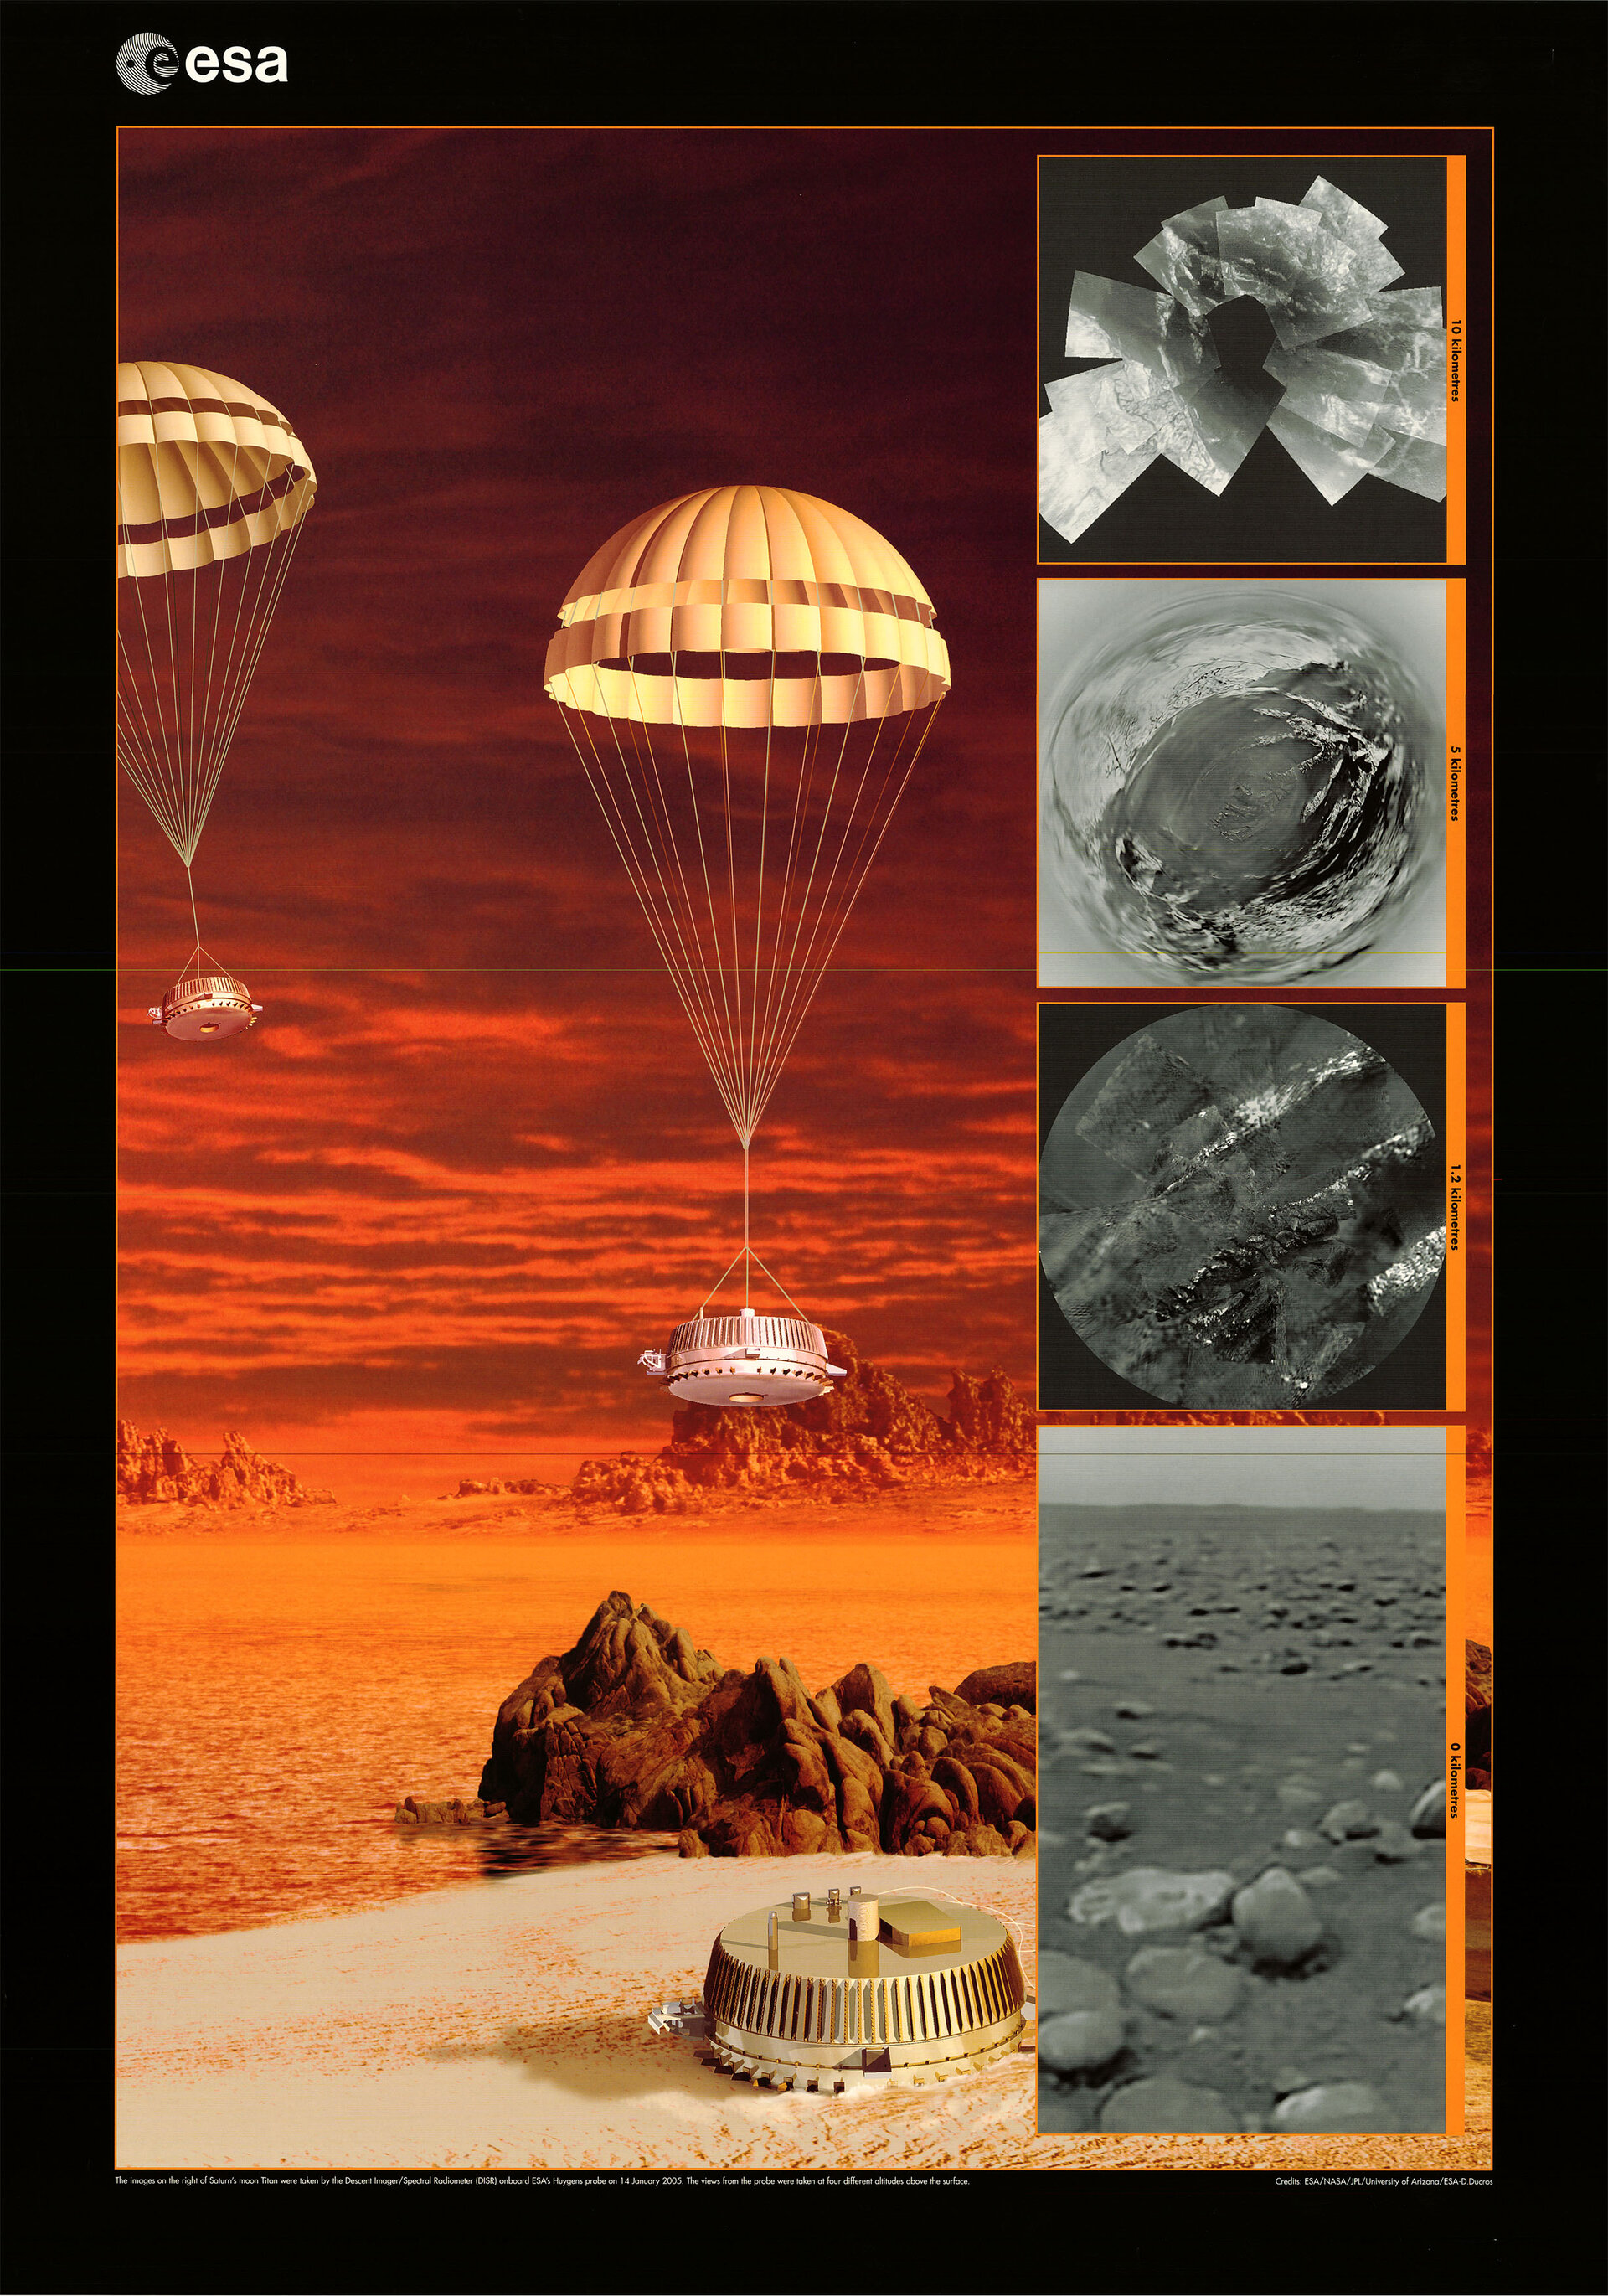 Huygens descends to Titan 2005